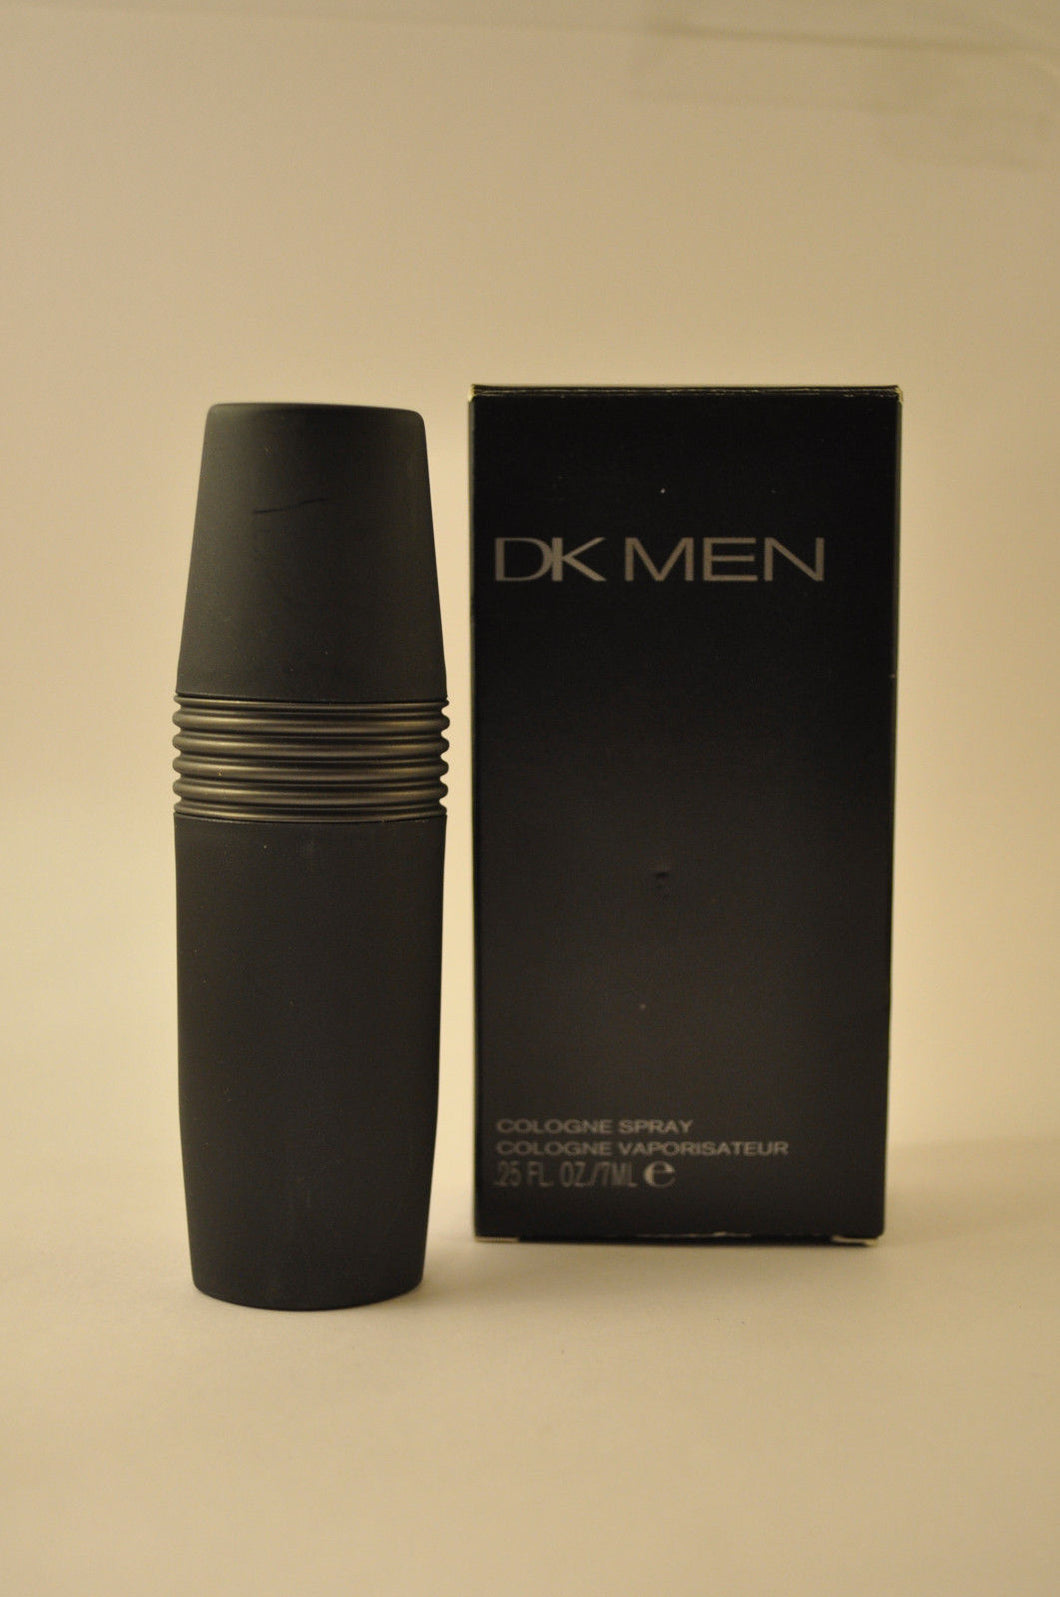 Donna Karan DK MEN .25 oz / 7 ml Cologne Spray Mini for Men * RARE * NEW IN BOX - Perfume Gallery